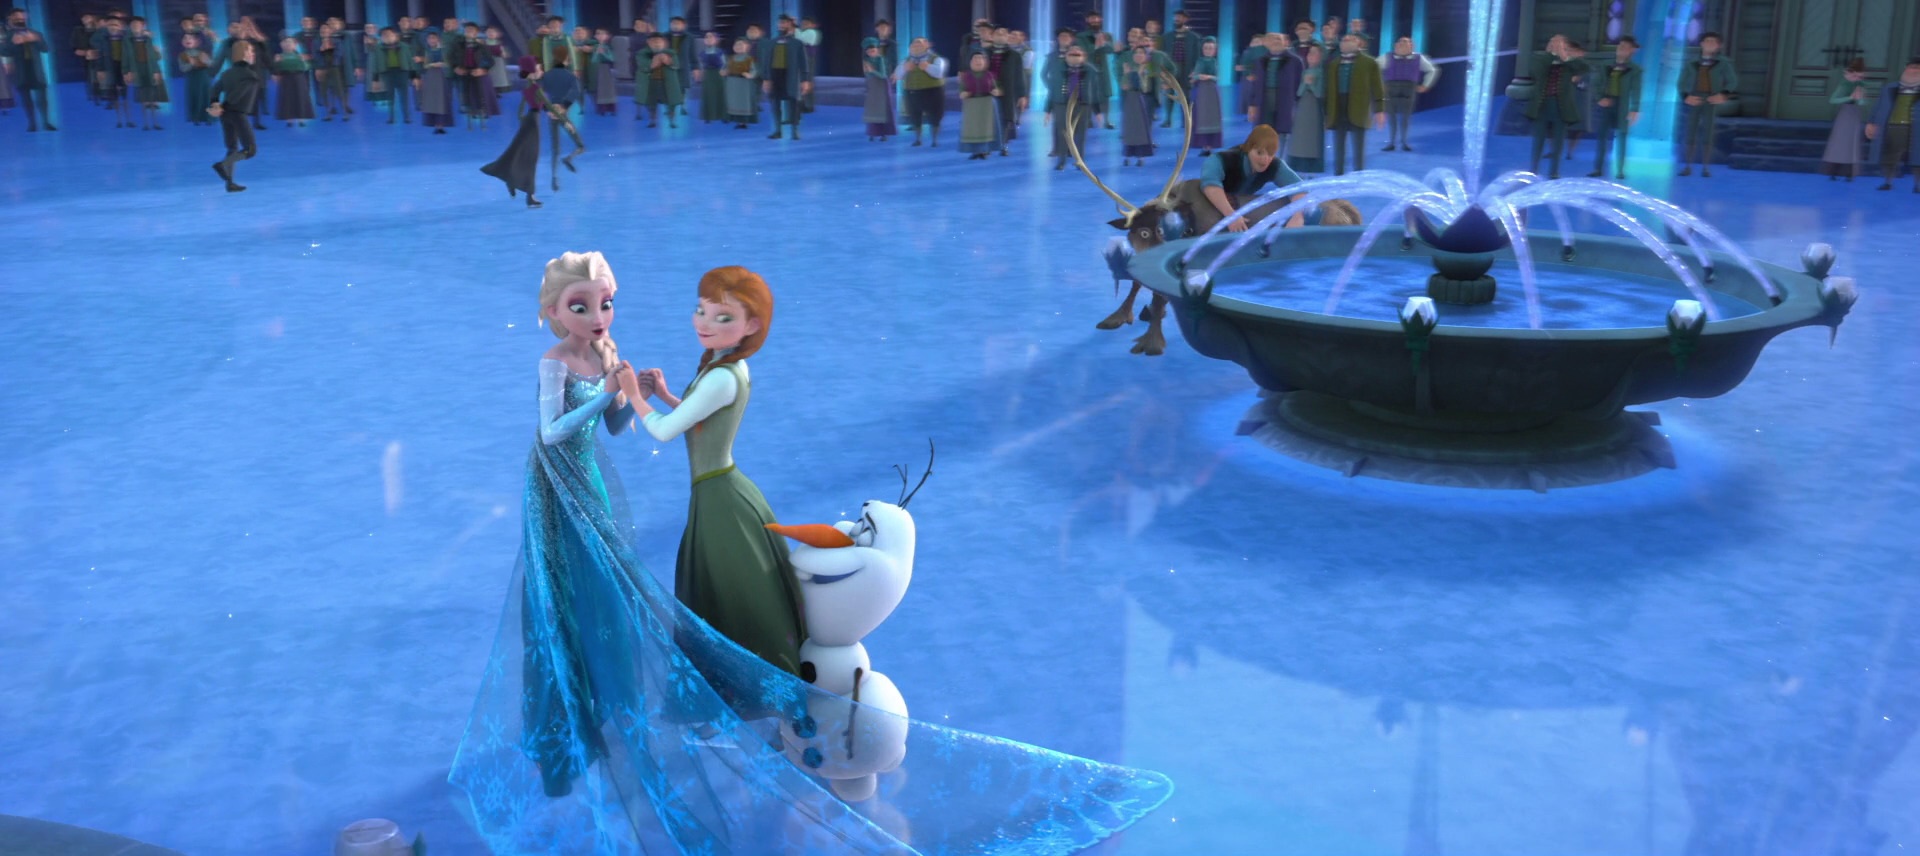 Kristoff (Frozen) 1080P, 2K, 4K, 5K HD wallpapers free download